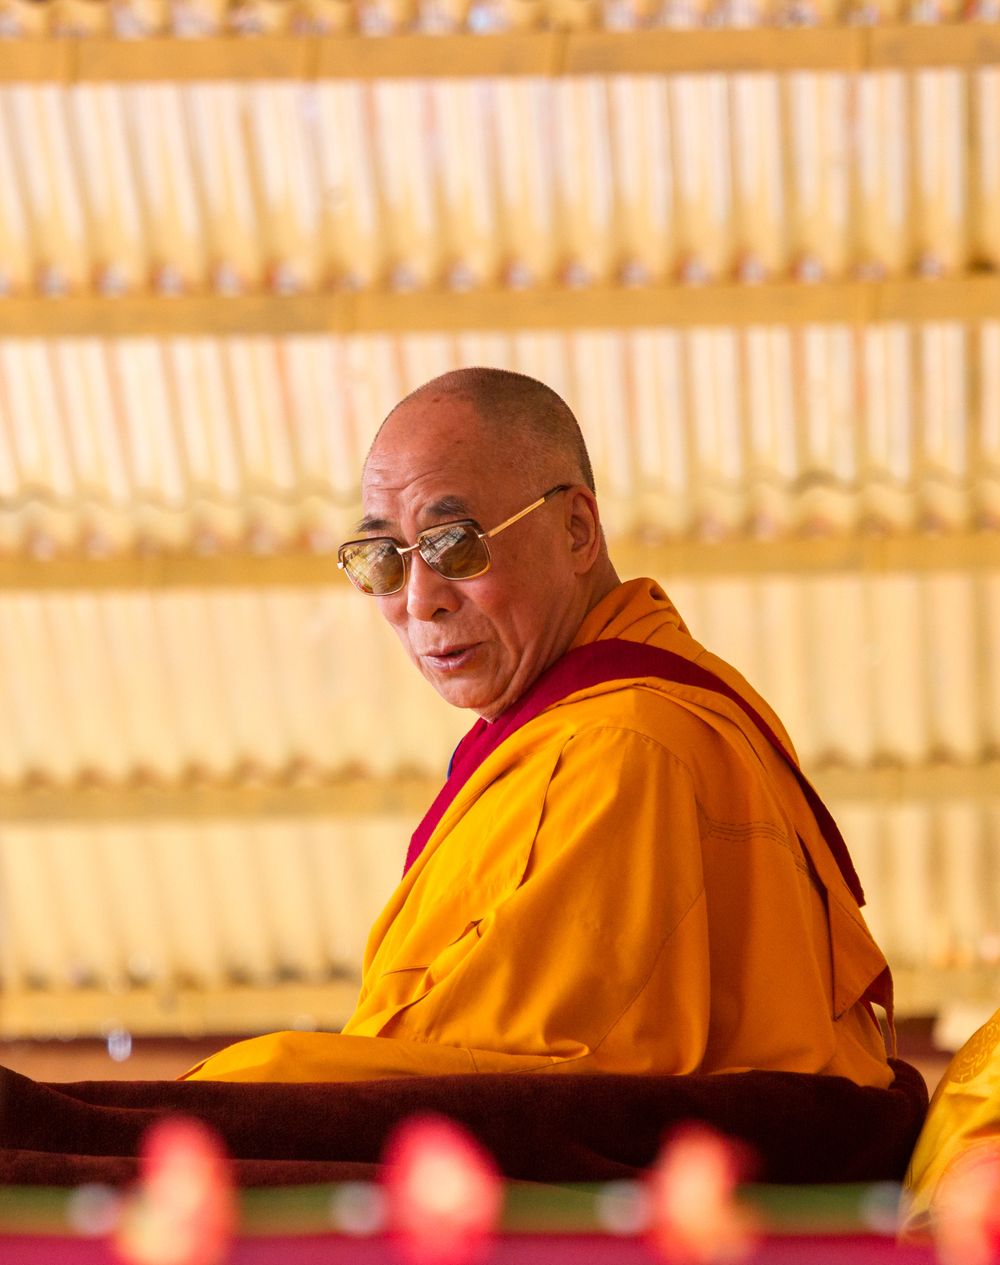 Positive Motivation from the Dalai Lama